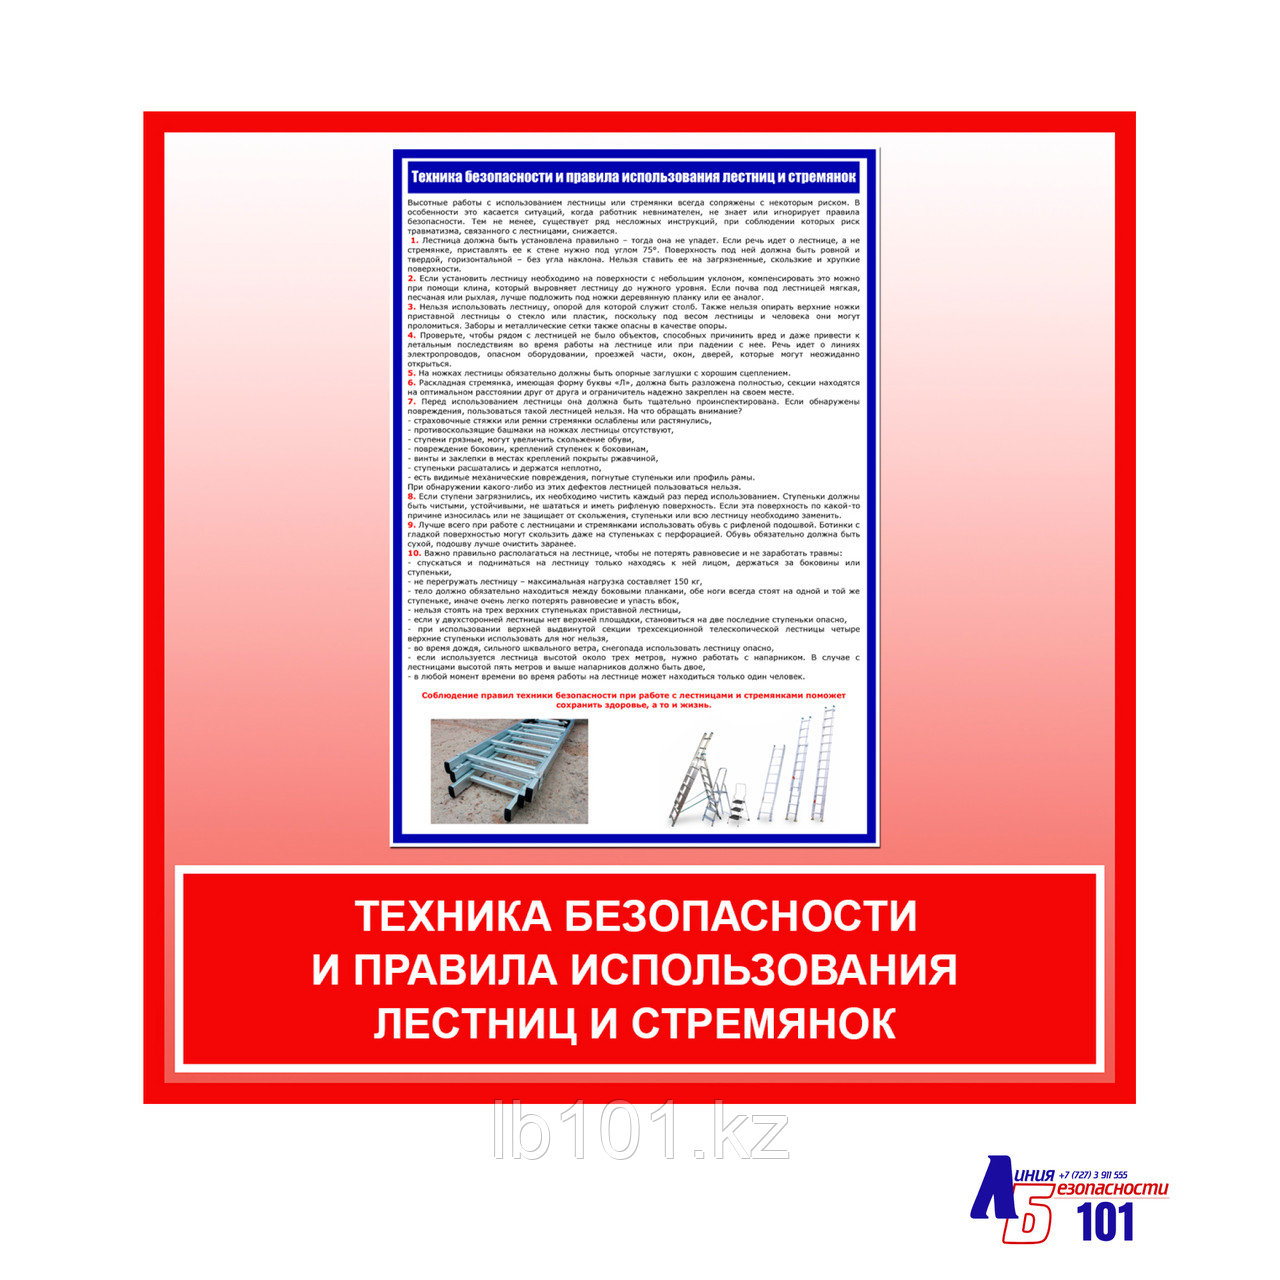 Плакат "Техника безопасности и правила использования лестниц и стремянок"